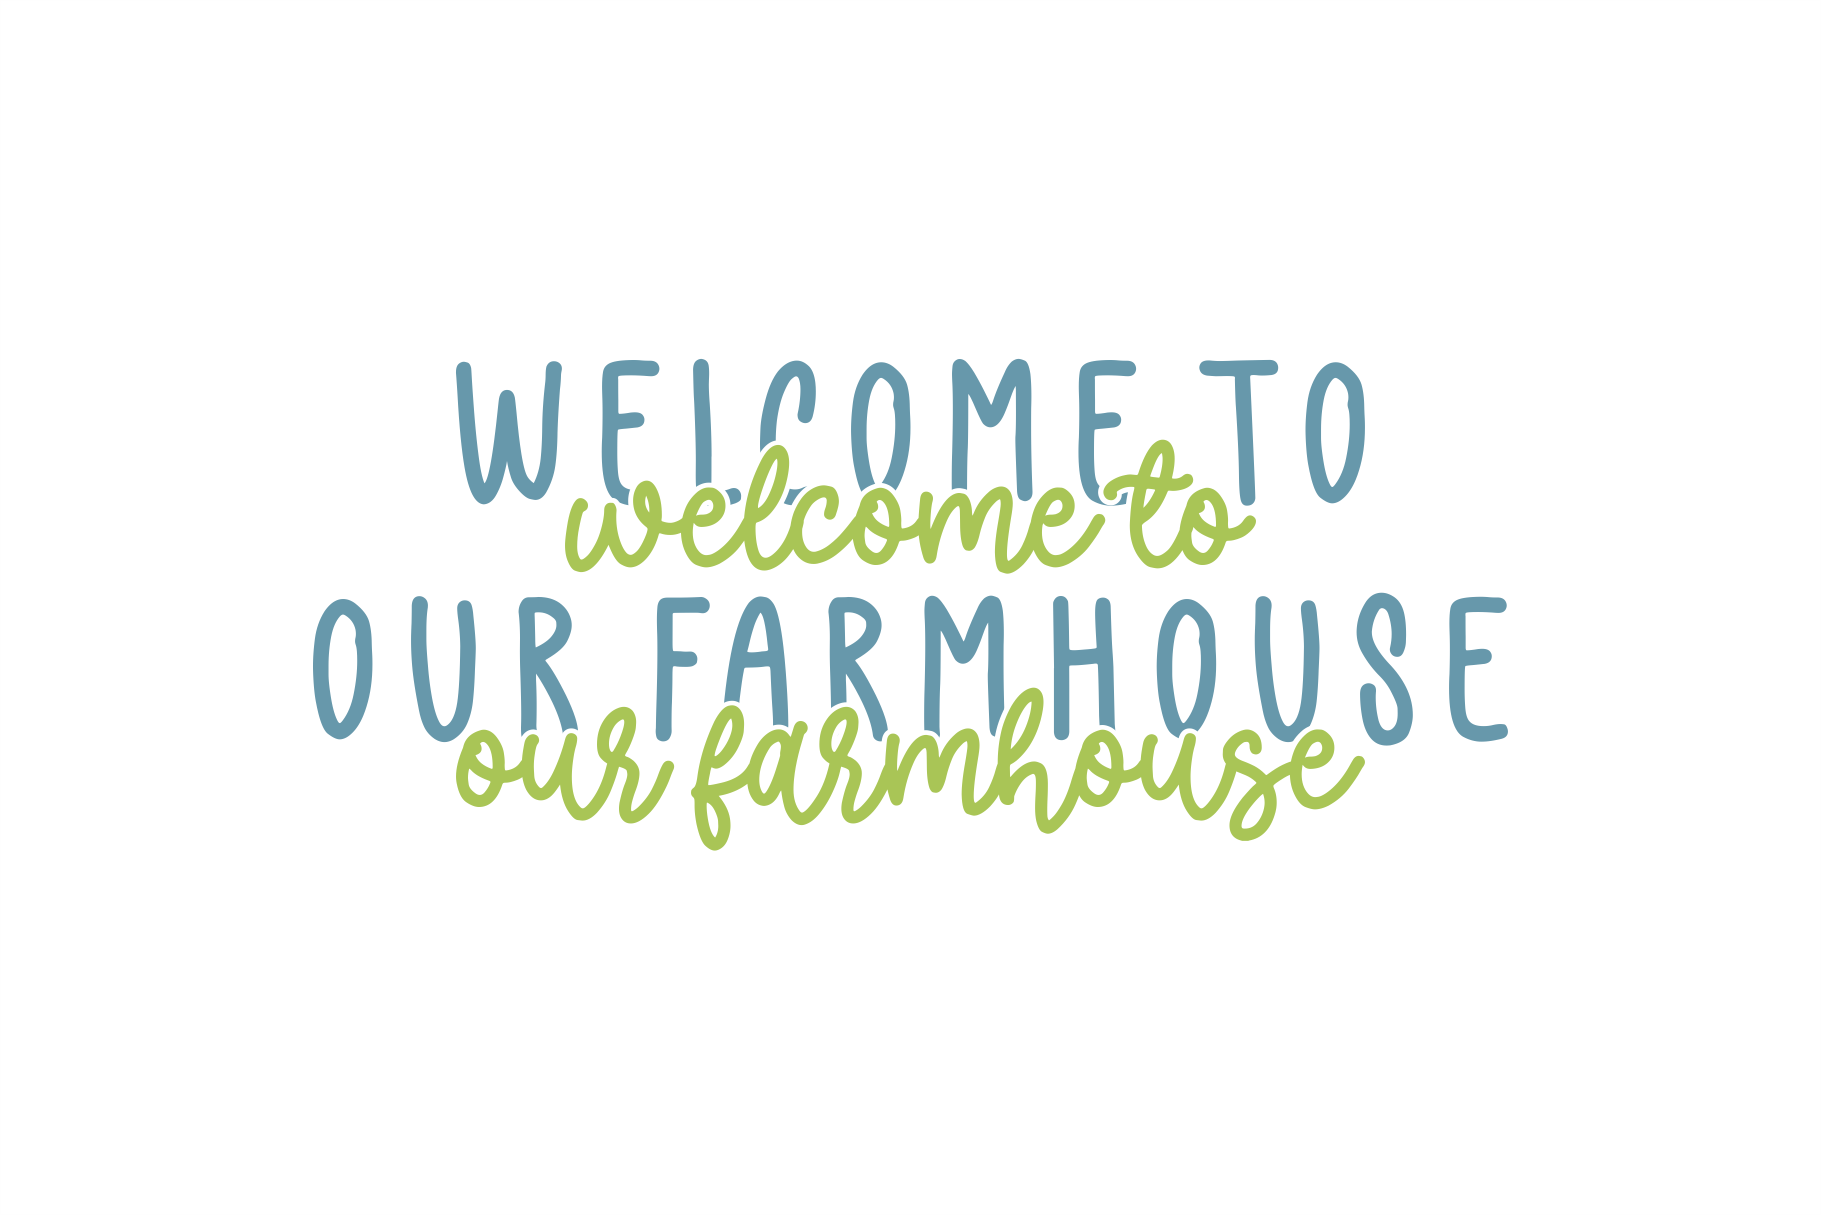 Father Farmhouse Sans